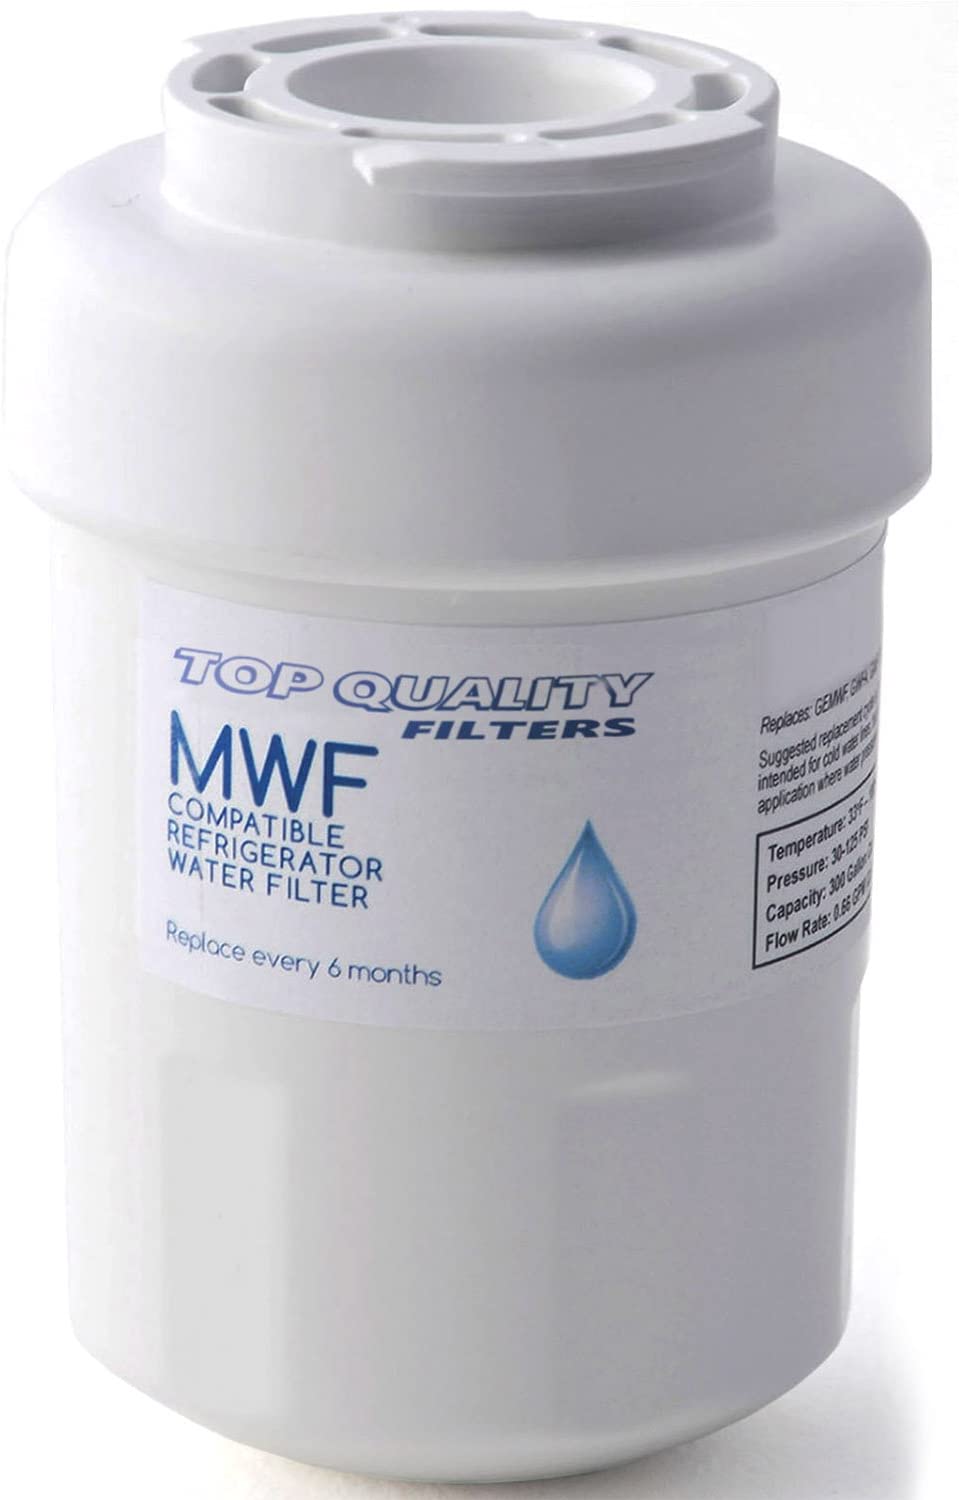 Ge rpwfe refrigerator water filter